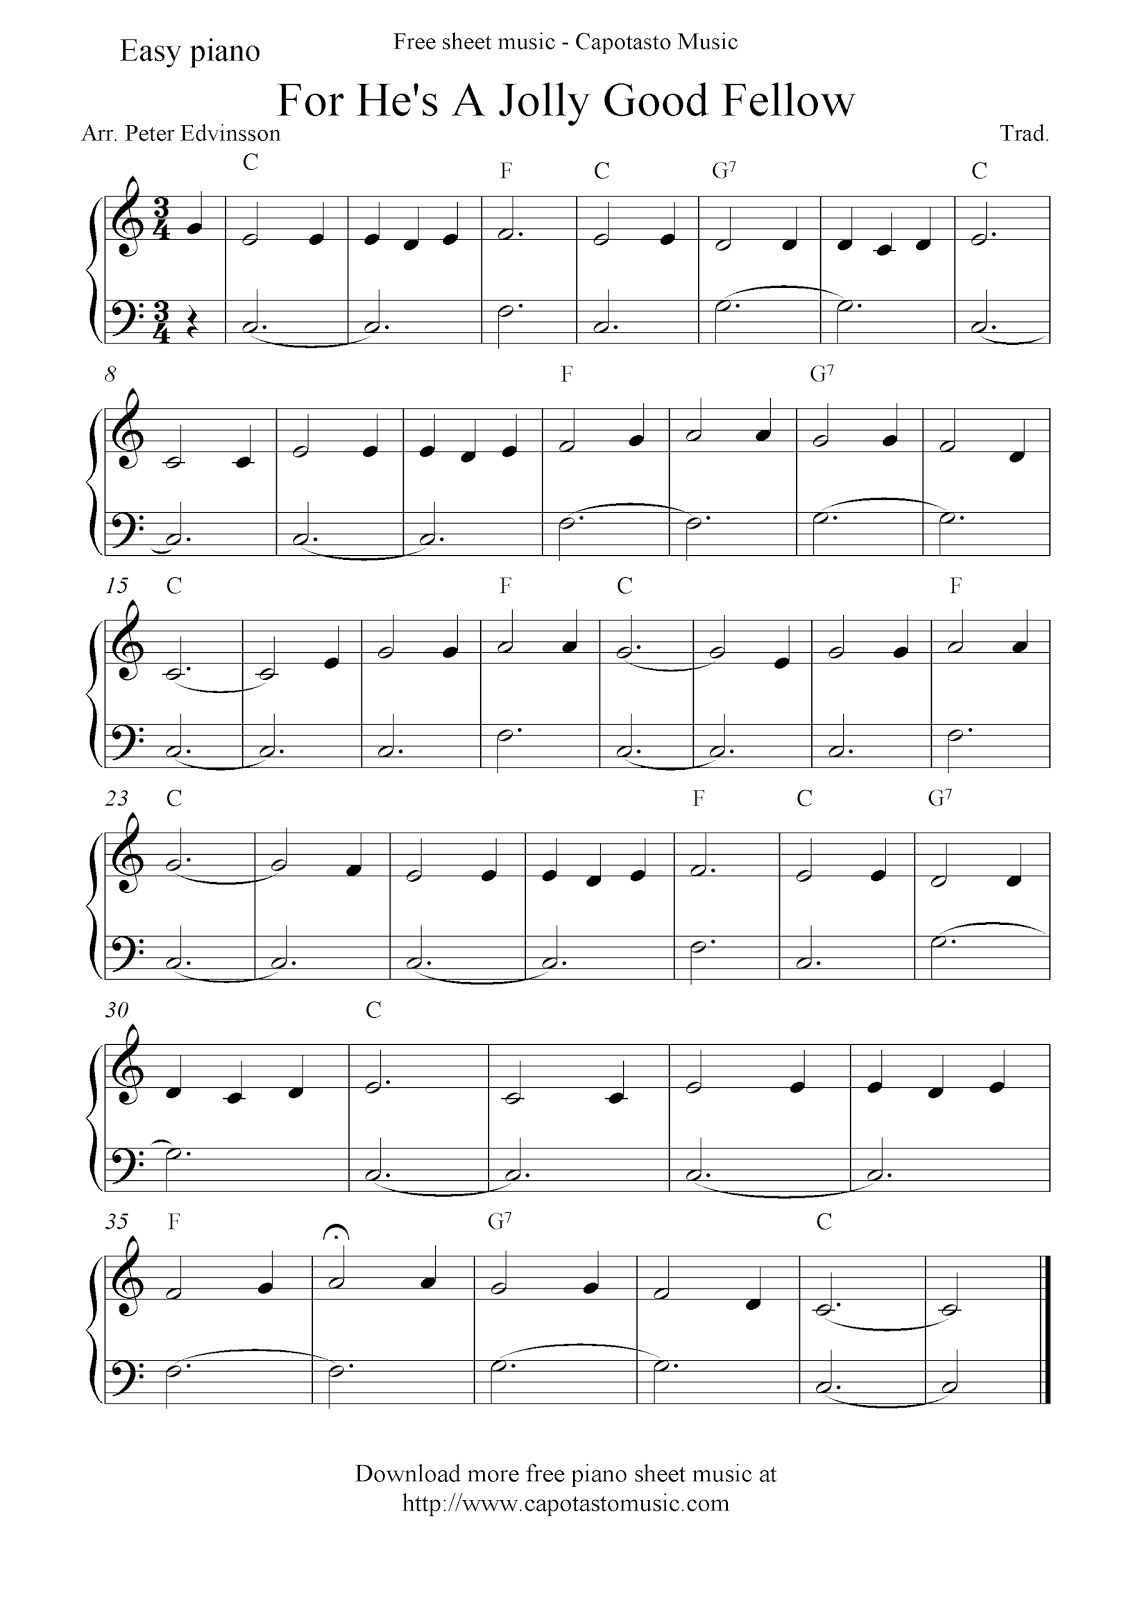 Easy Piano Sheet Music Free Printable